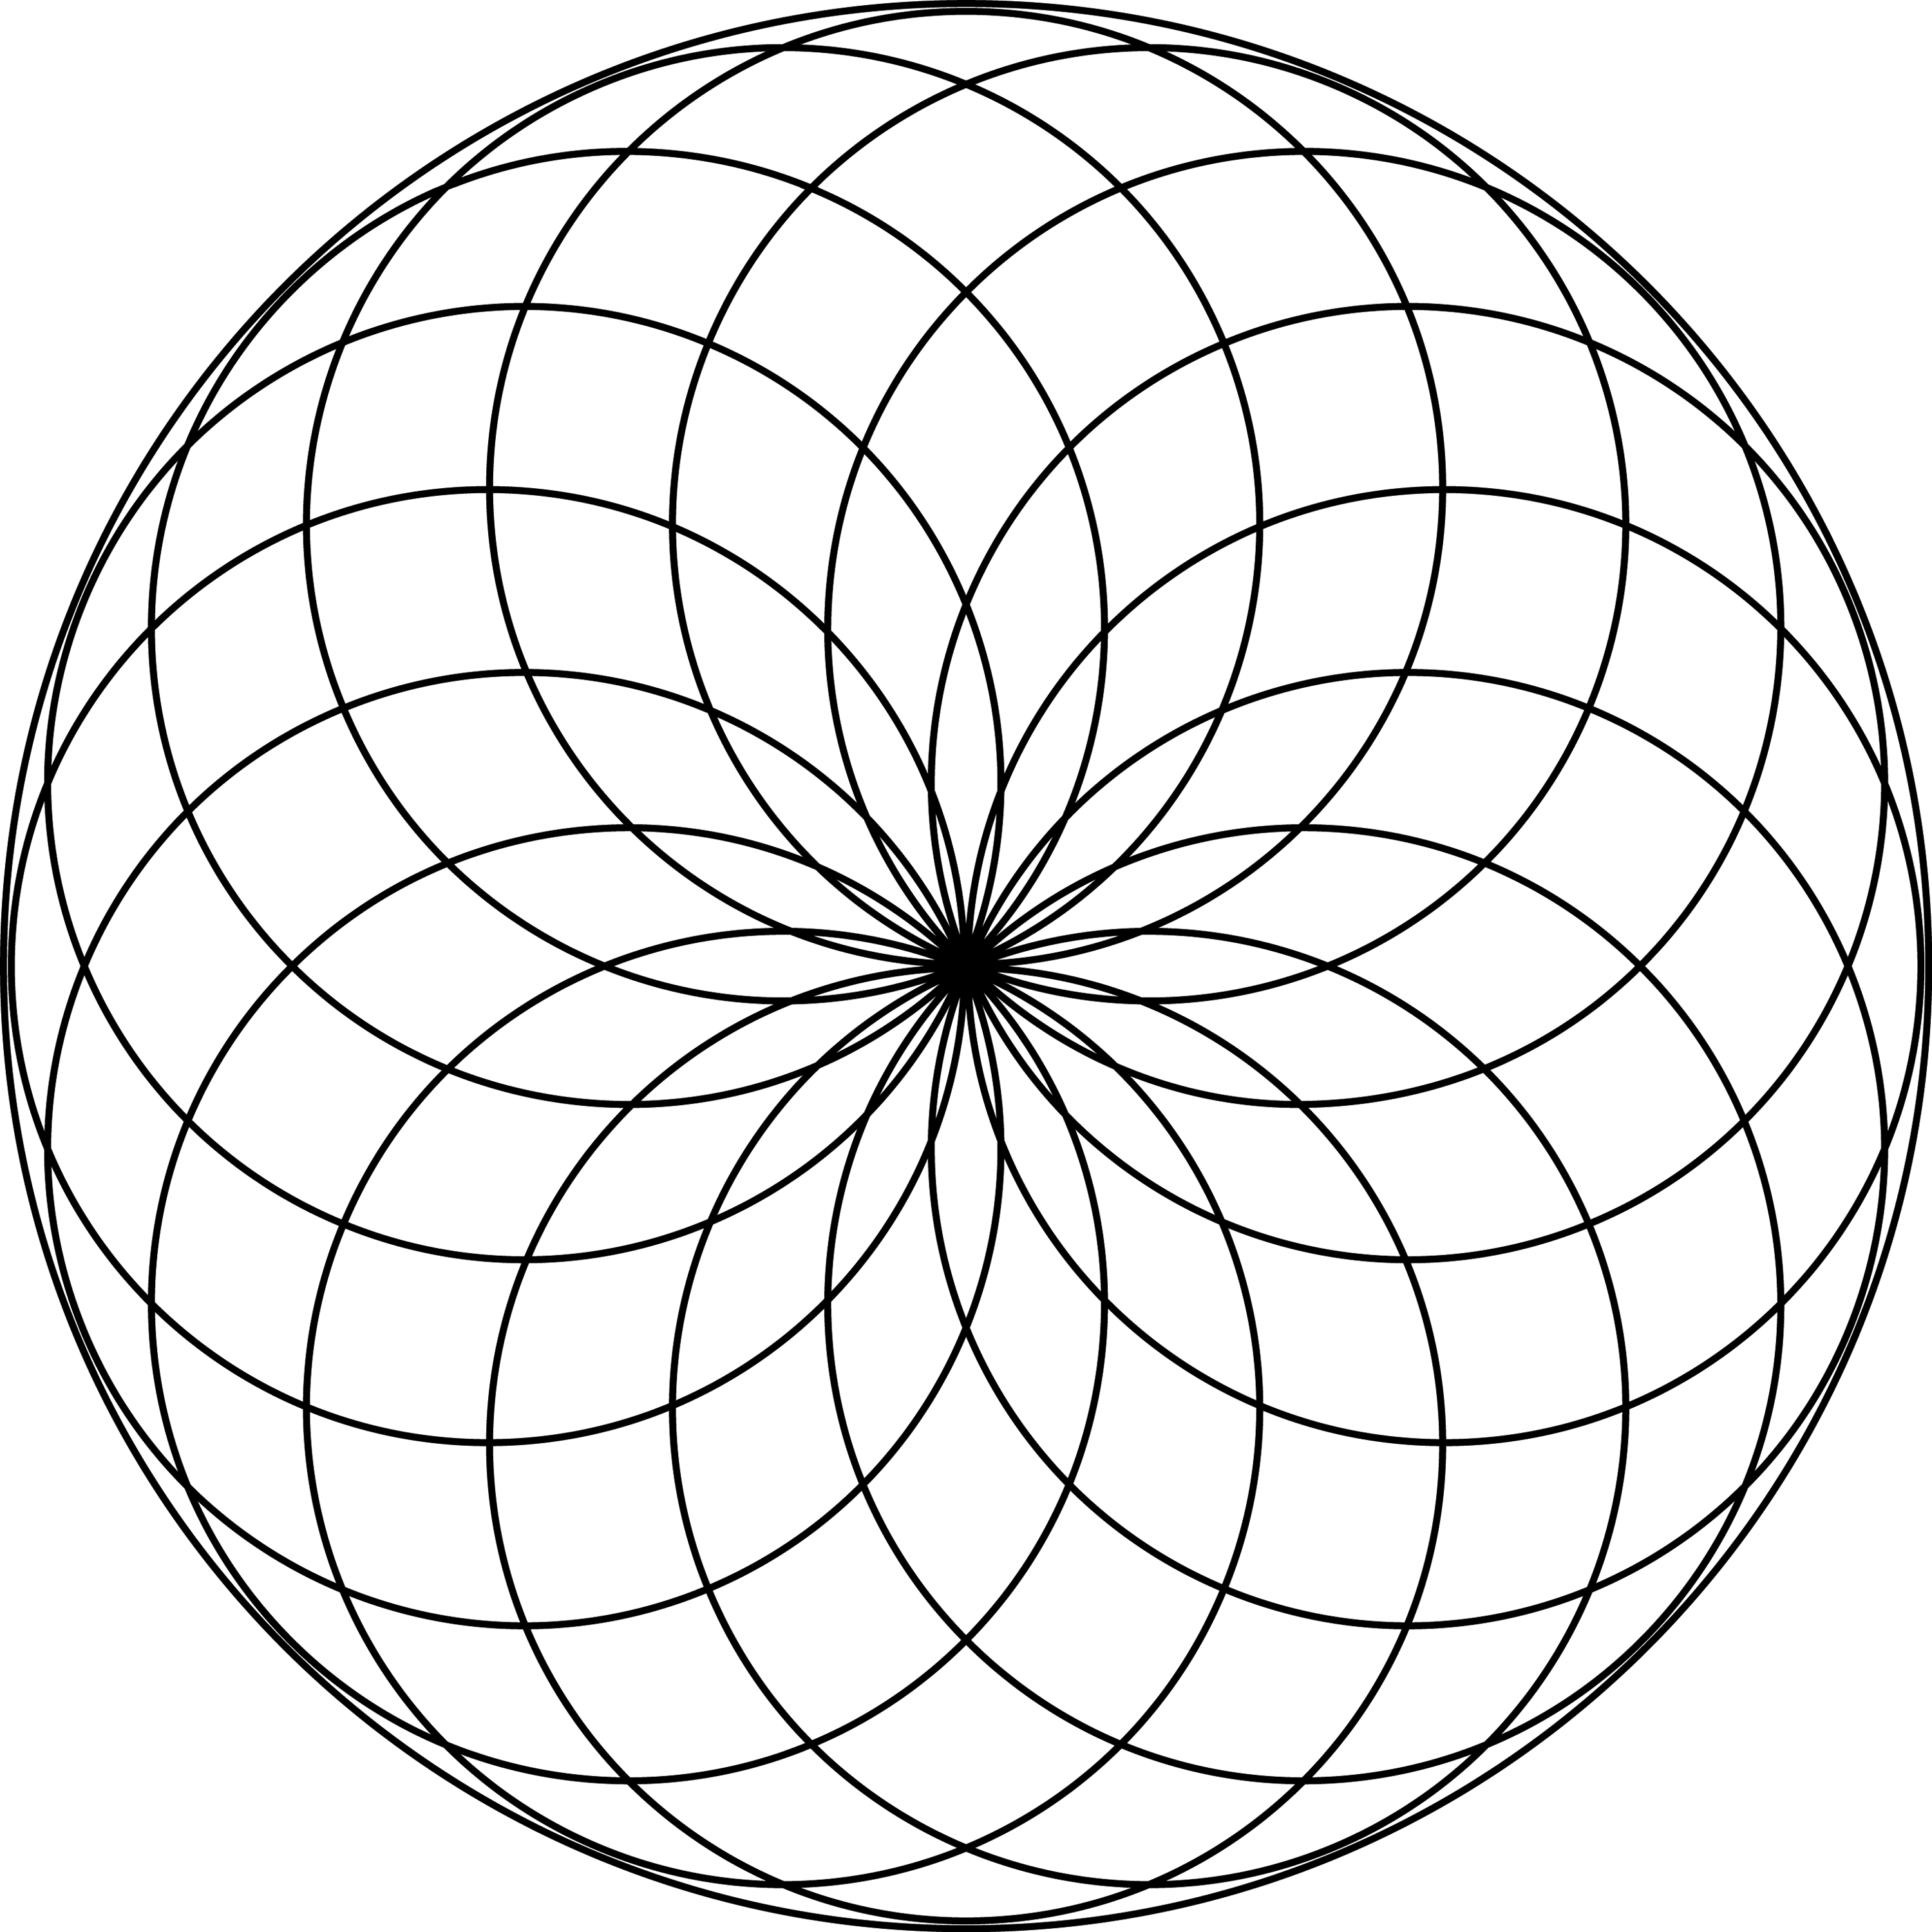 Circular Rosette With 16 Petals | ClipArt ETC